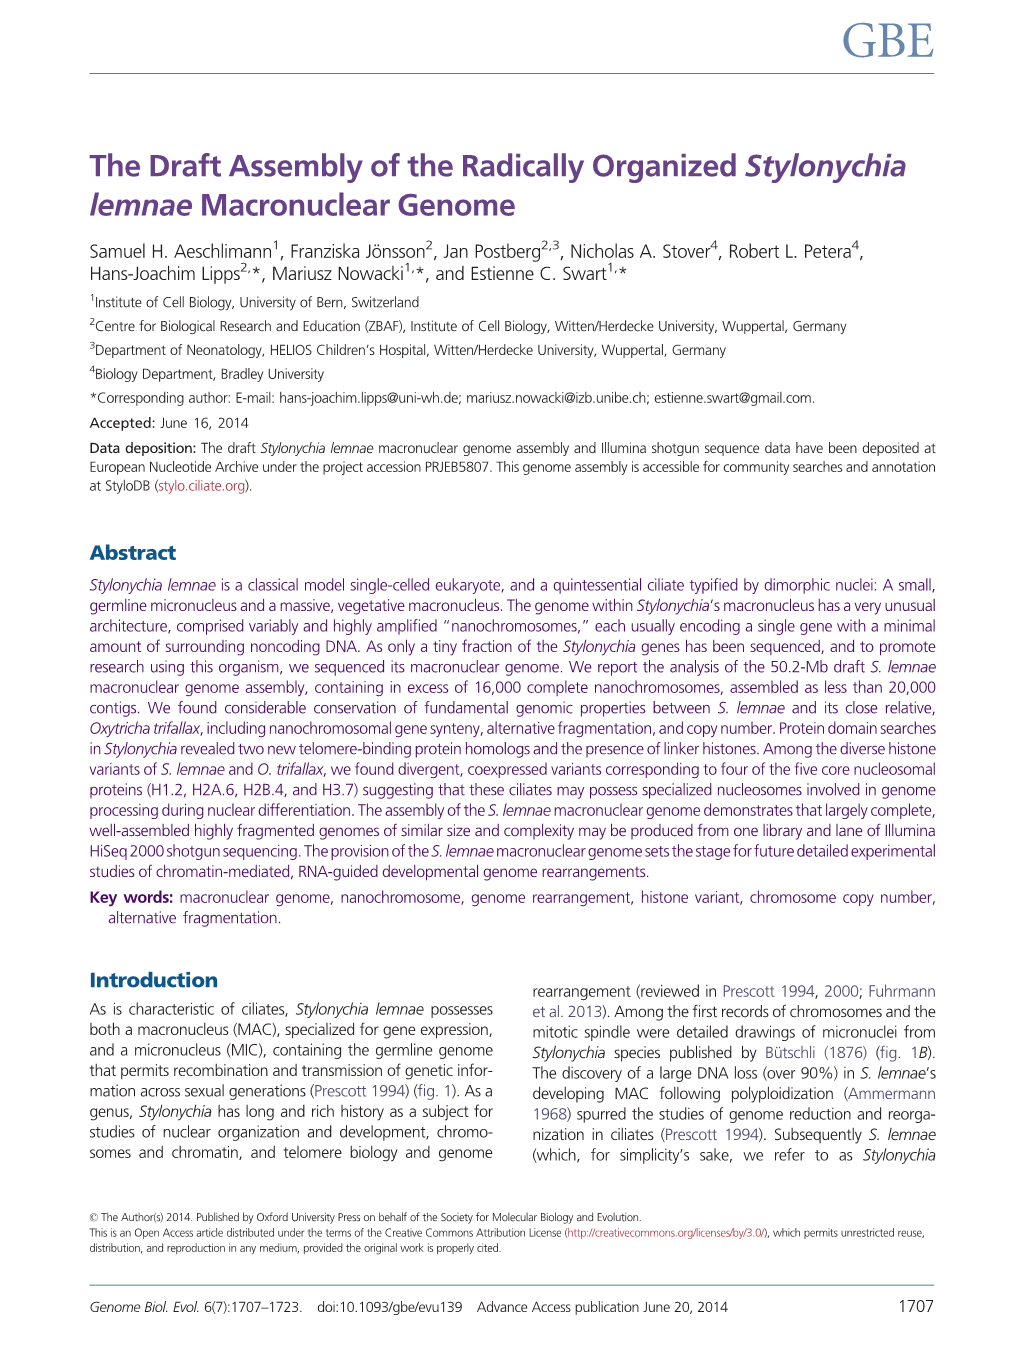 The Draft Assembly of the Radically Organized Stylonychia Lemnae Macronuclear Genome